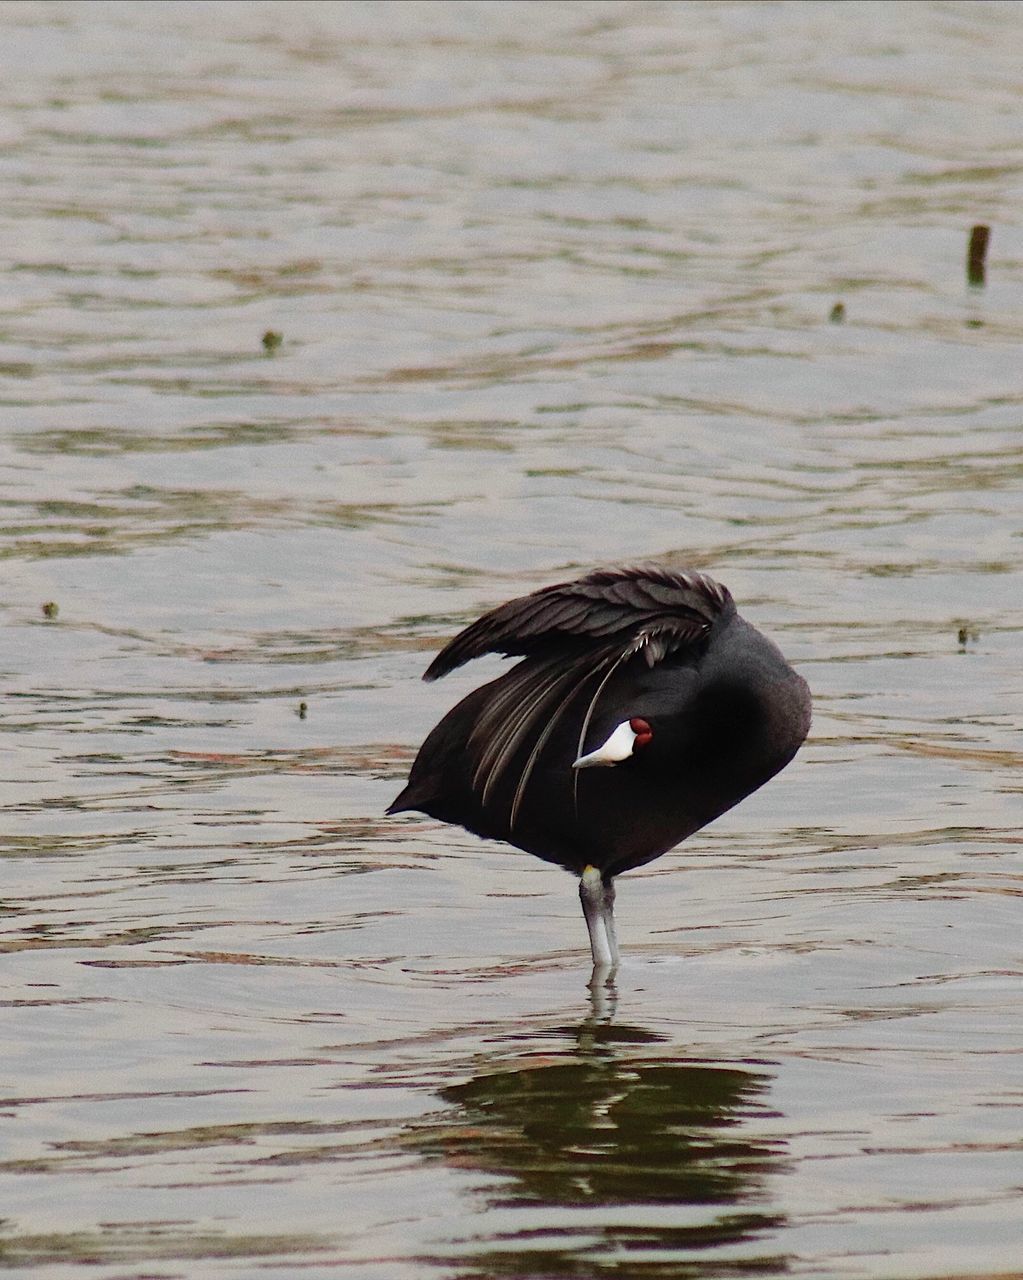 BIRD ON A LAKE